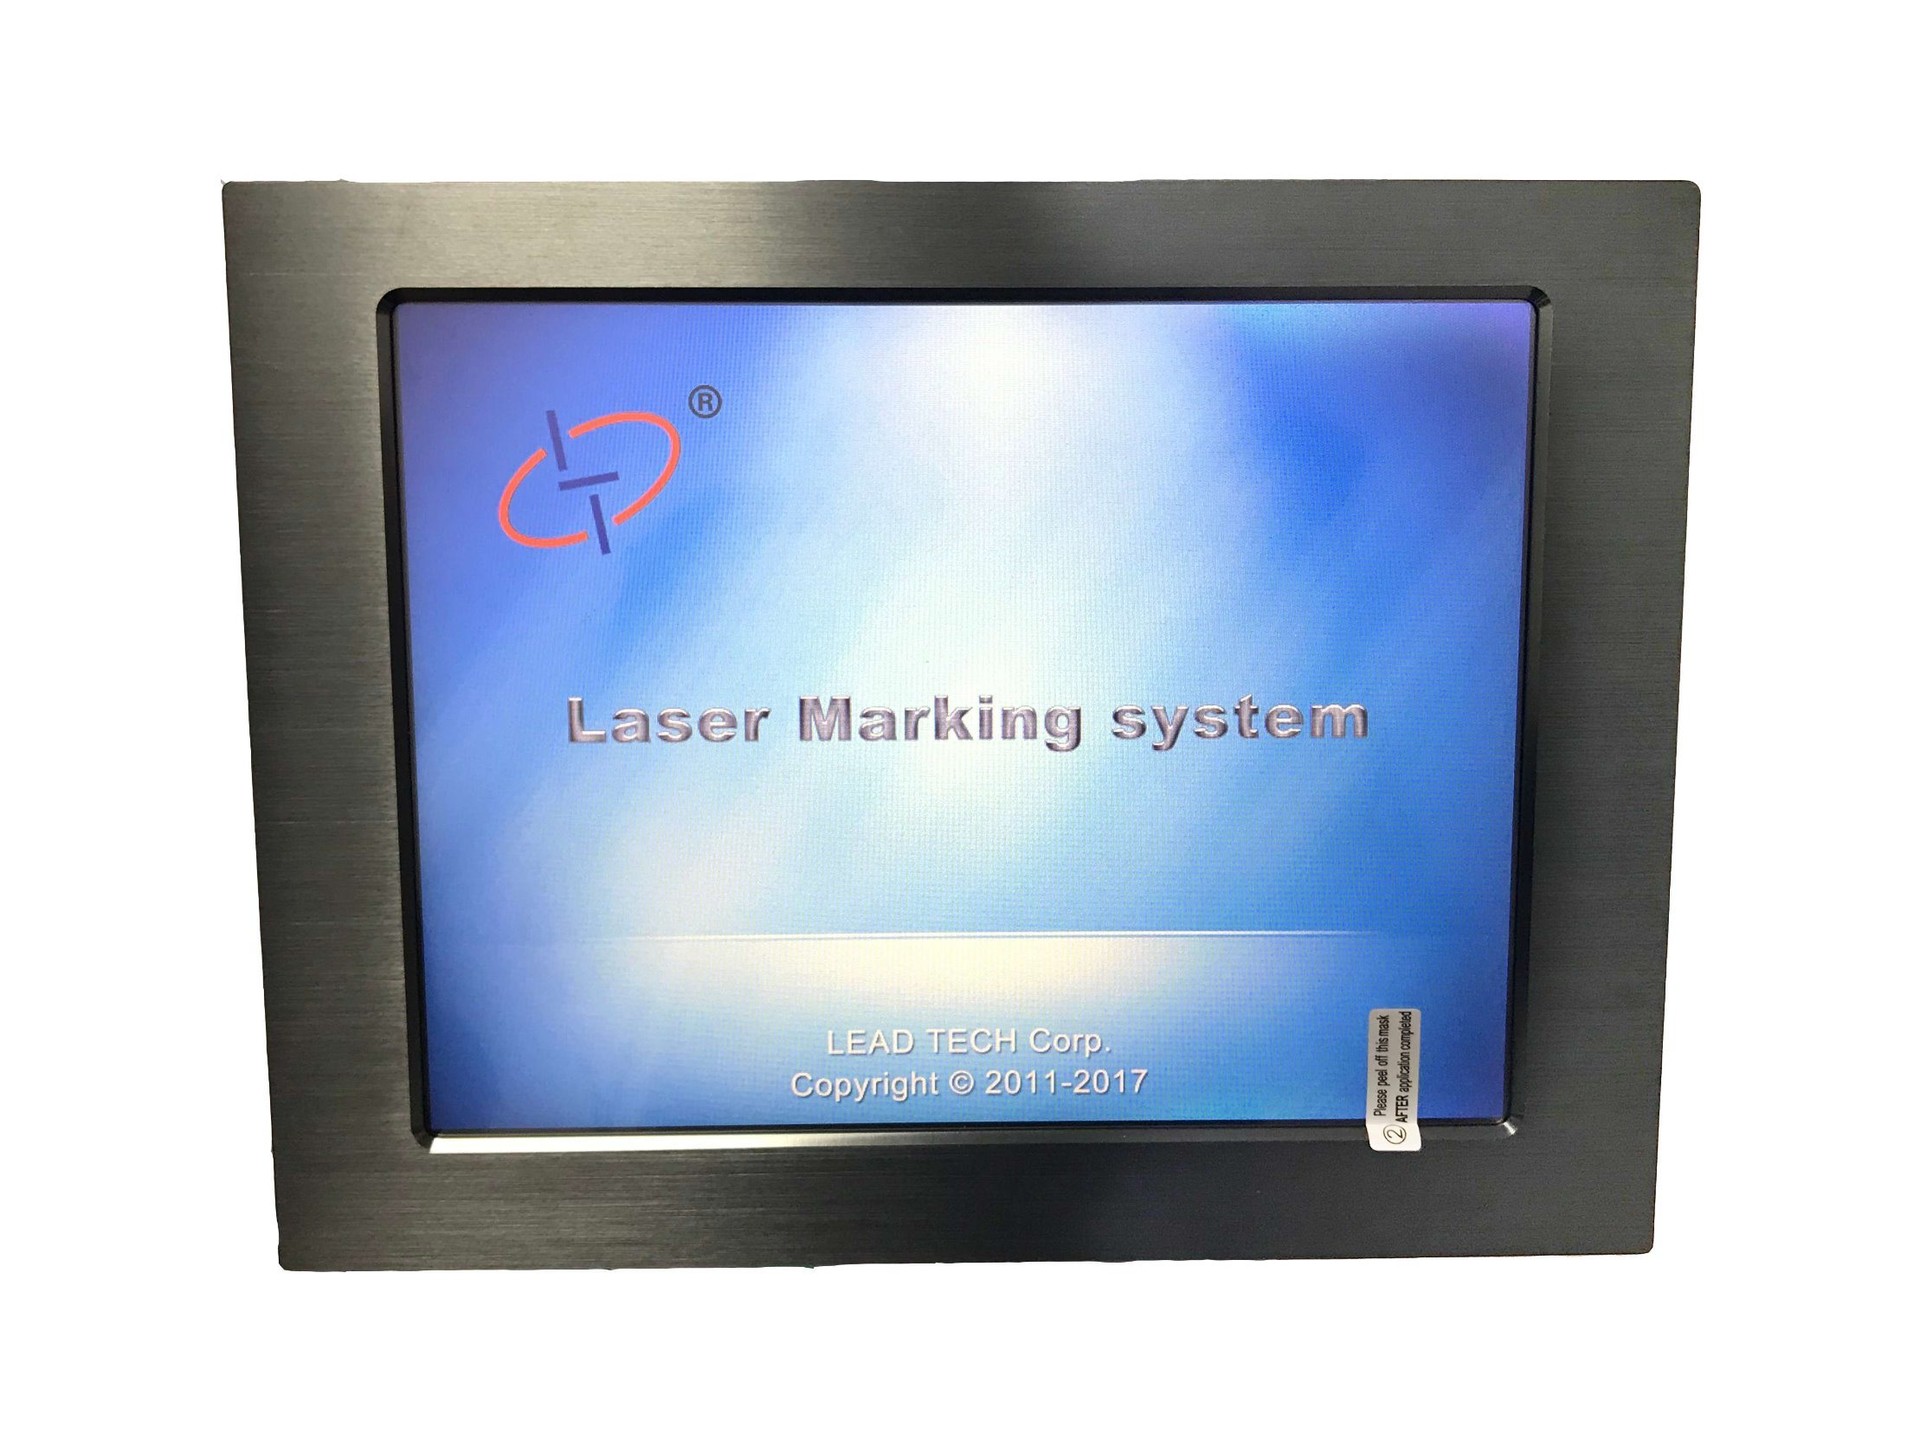 Lt8020c/Lt8030c CO2 20W/30W High Performance Digital Laser Marking Printer for PPR/PE/PVC Pipe Marking